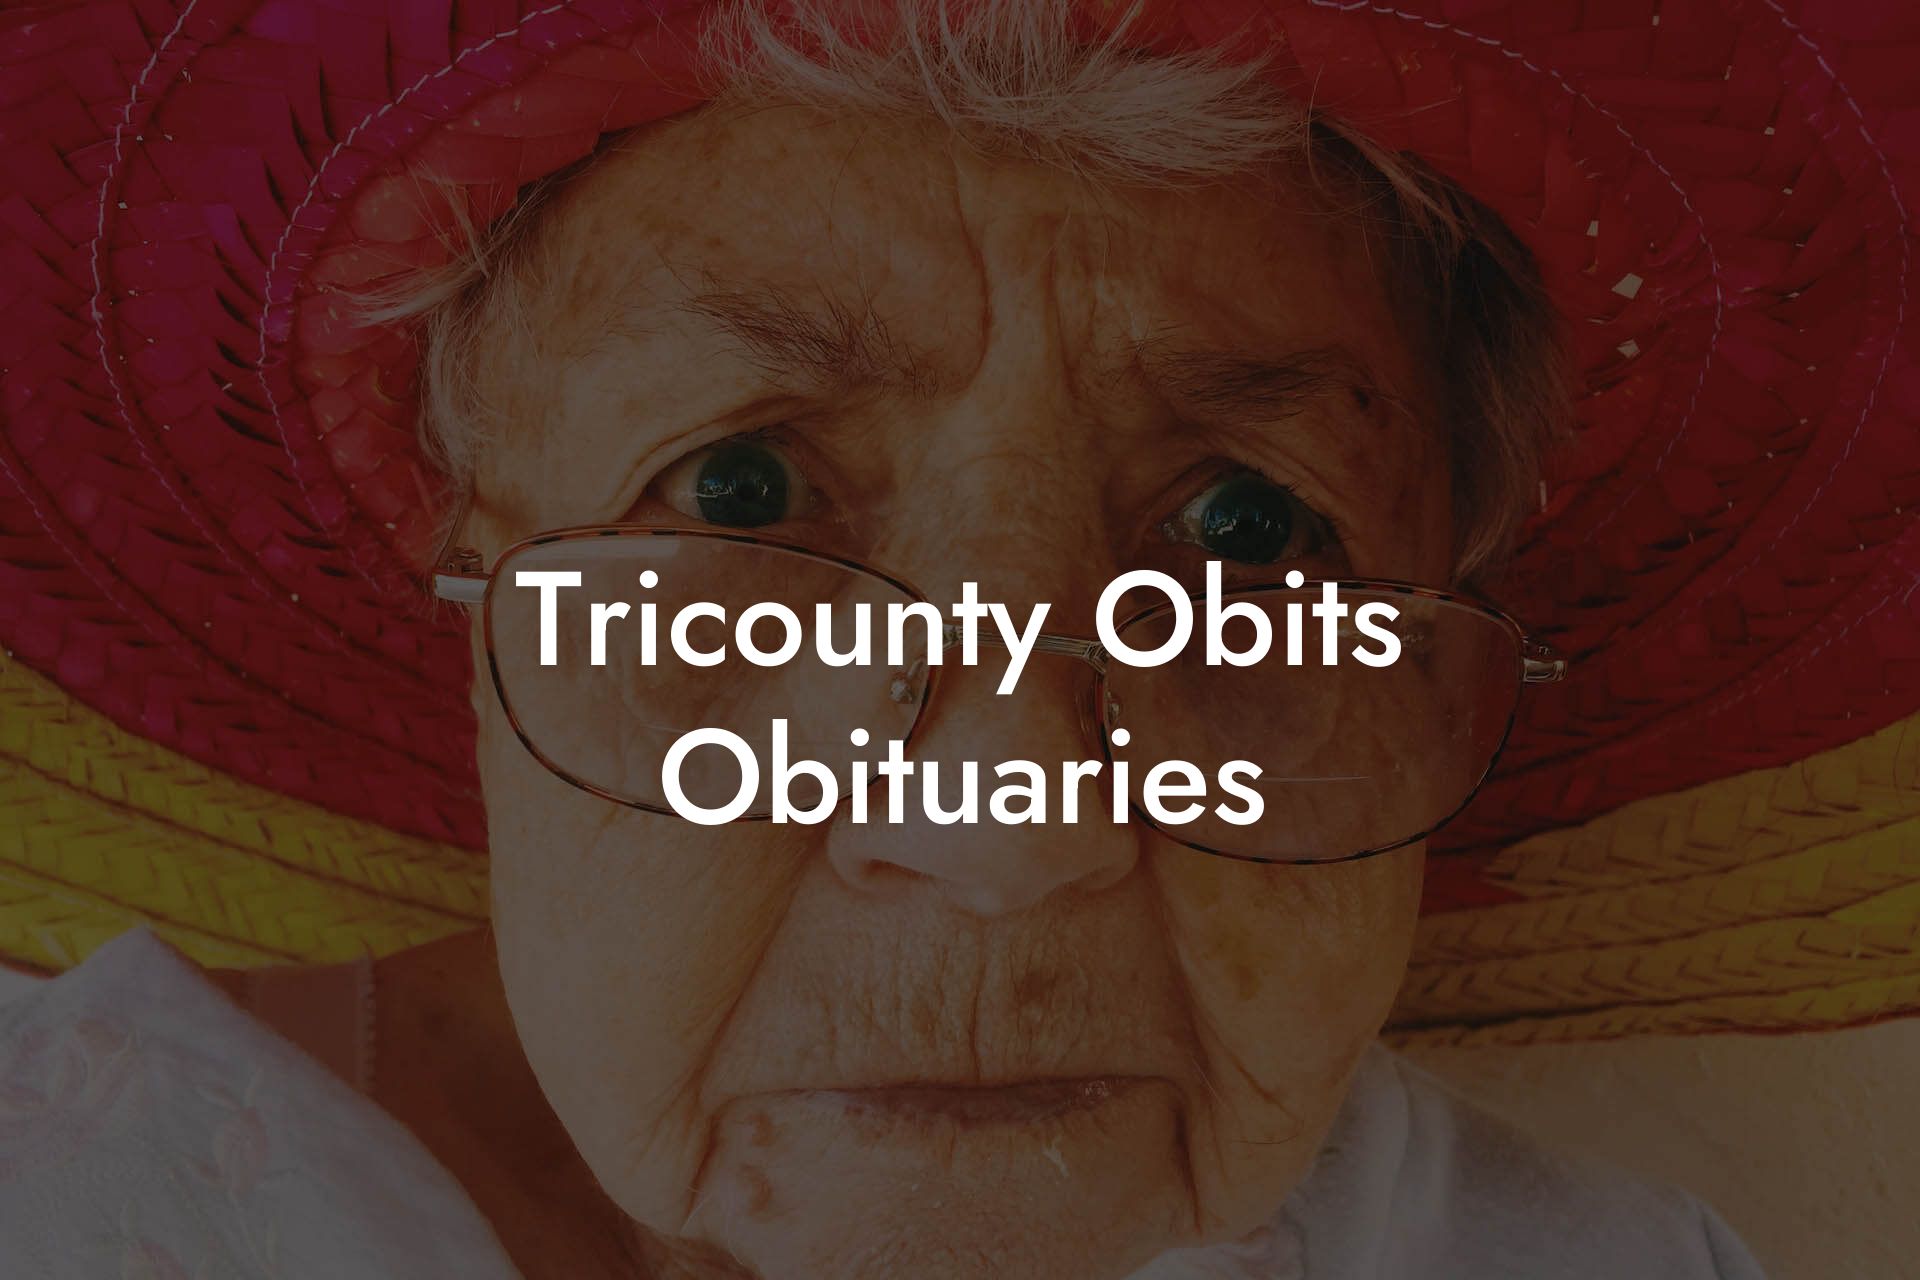 Tricounty Obits Obituaries